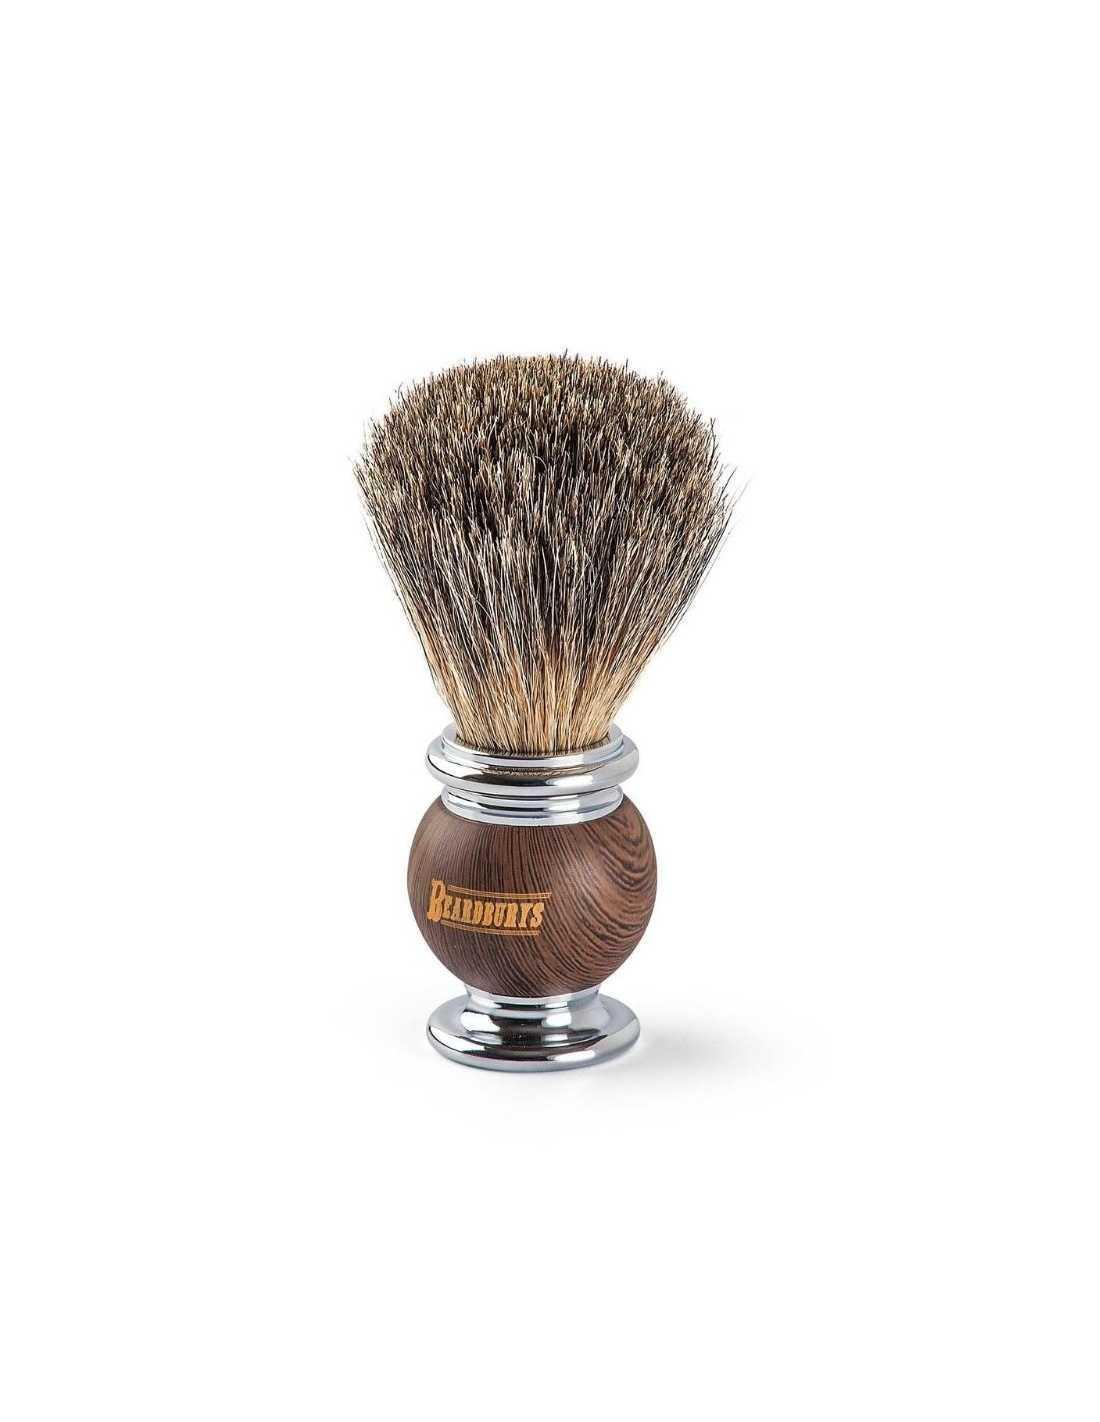 Beardburys Shaving Brush | Barberkost | Beardburys | JK SHOP | JK Barber og herre frisør | Lavepriser | Best